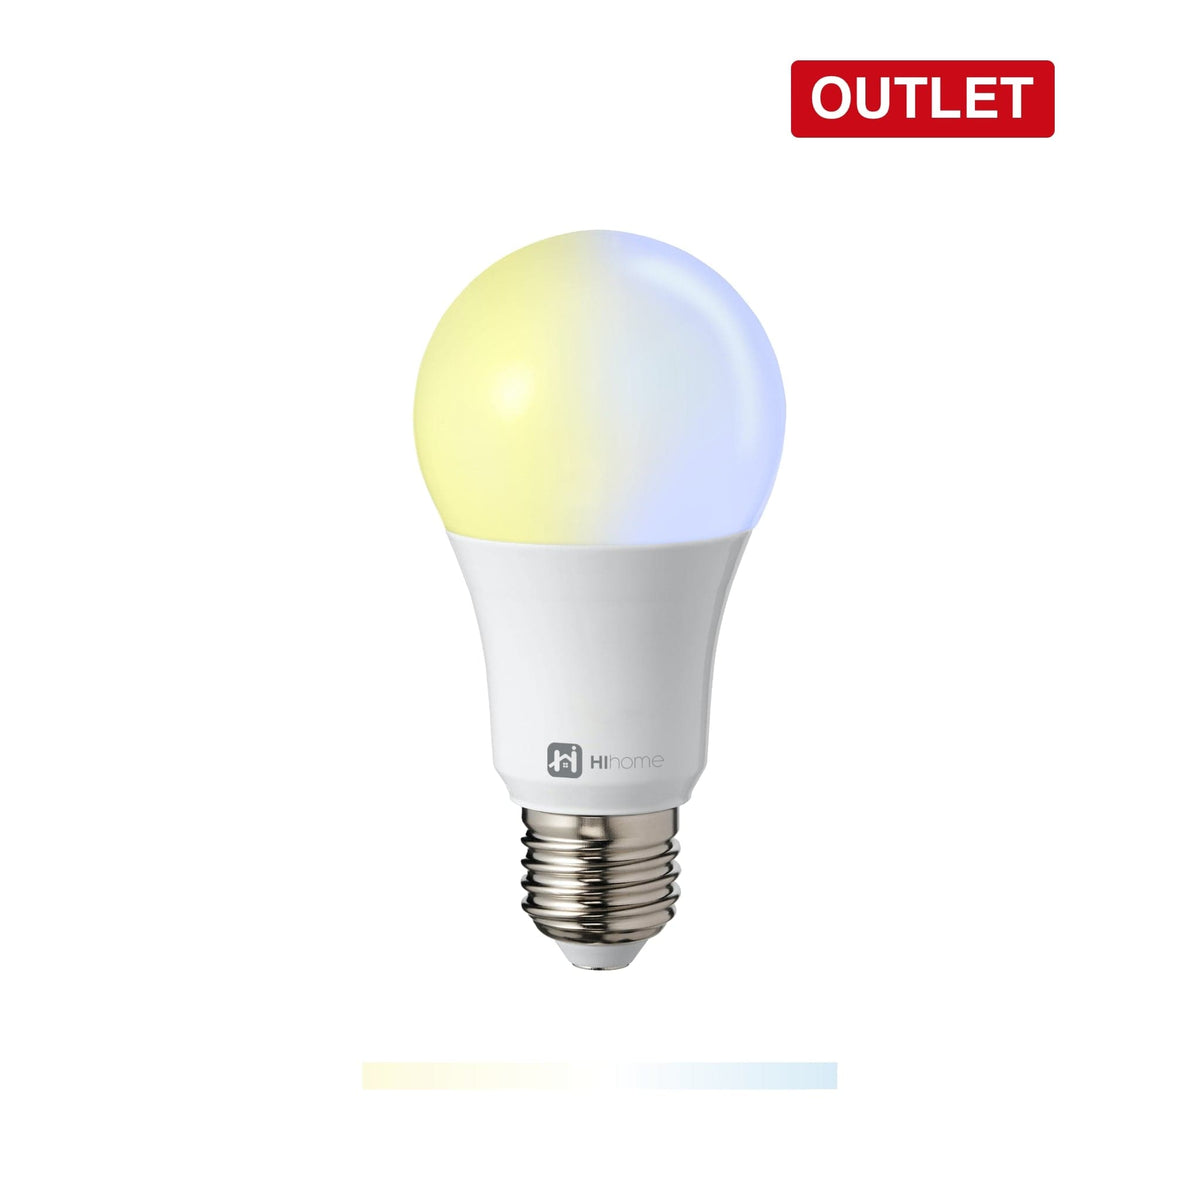 Hihome Ambience RGB + warm white LED WiFi bulb